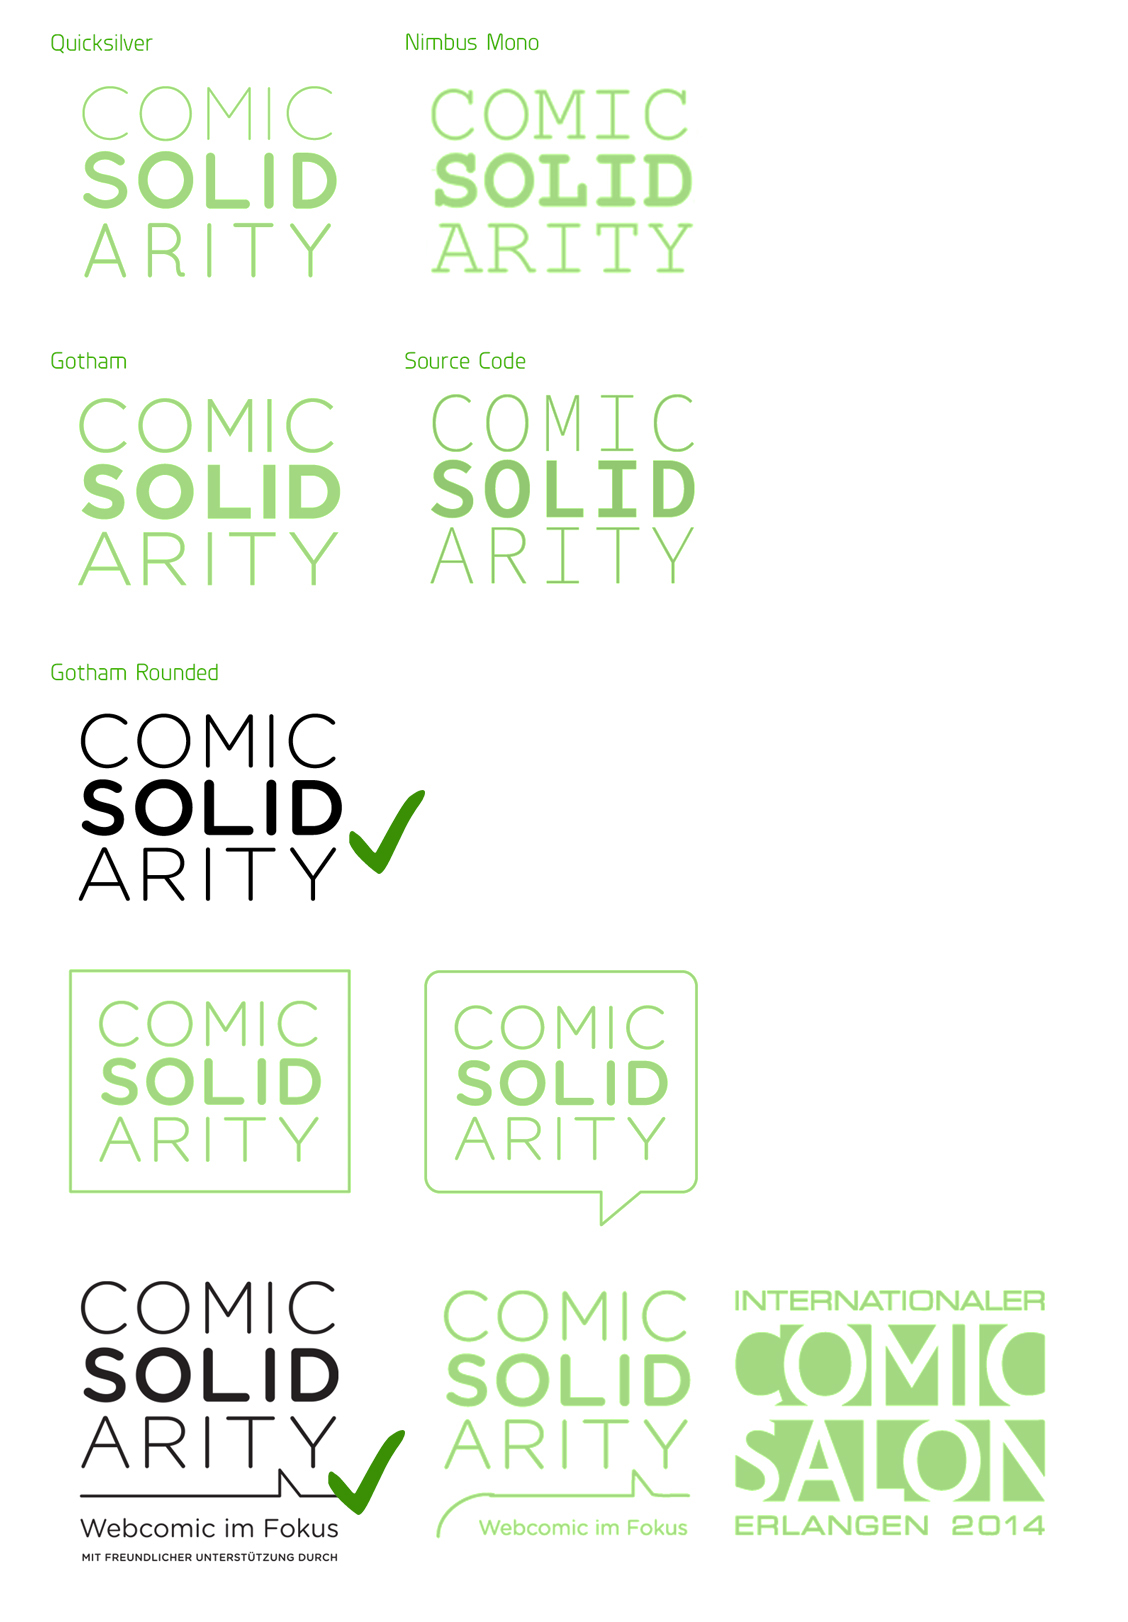 COMIC SOLIDARITY Webcomic bd online digital Event Design Adaptation organisation concept sponsoring marketing   erlangen Internationaler Comic Salon